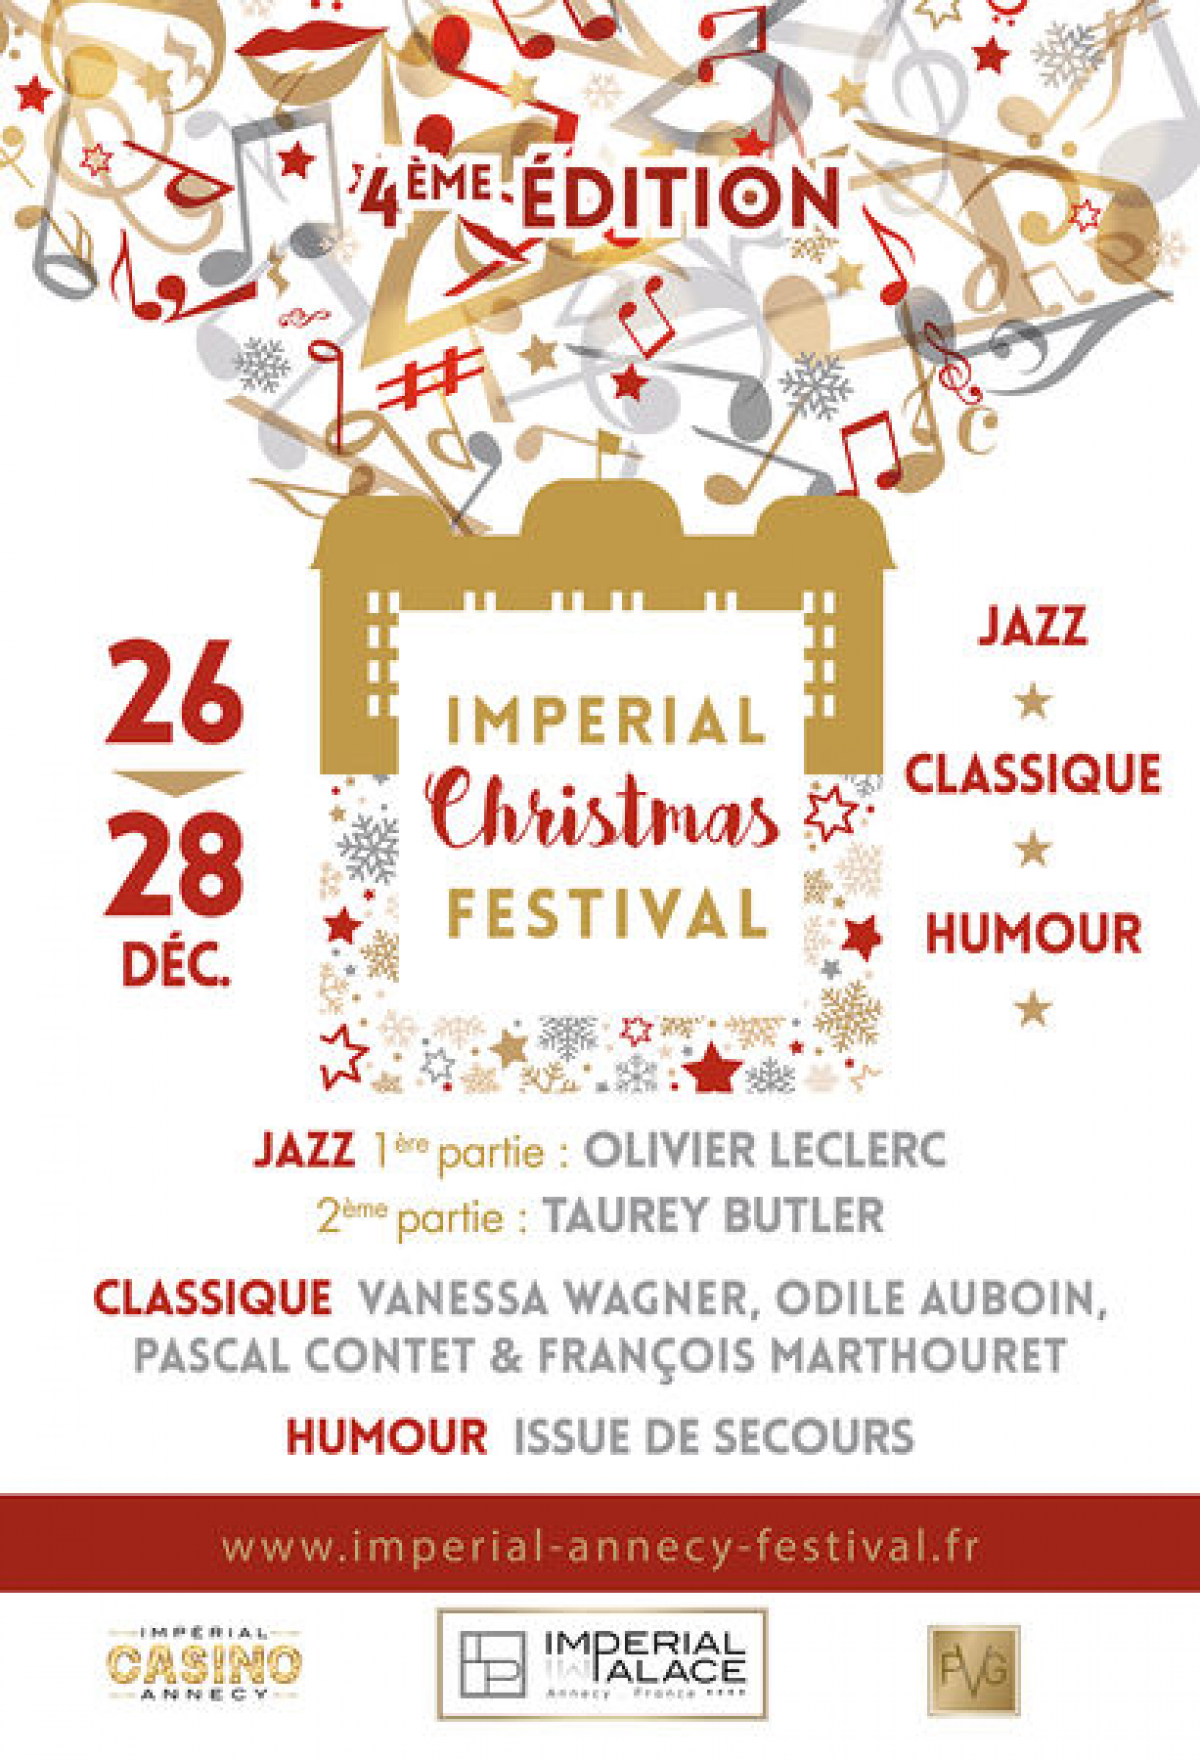 Impérial Christmas Festival : Olivier Leclerc et Taurey Butler